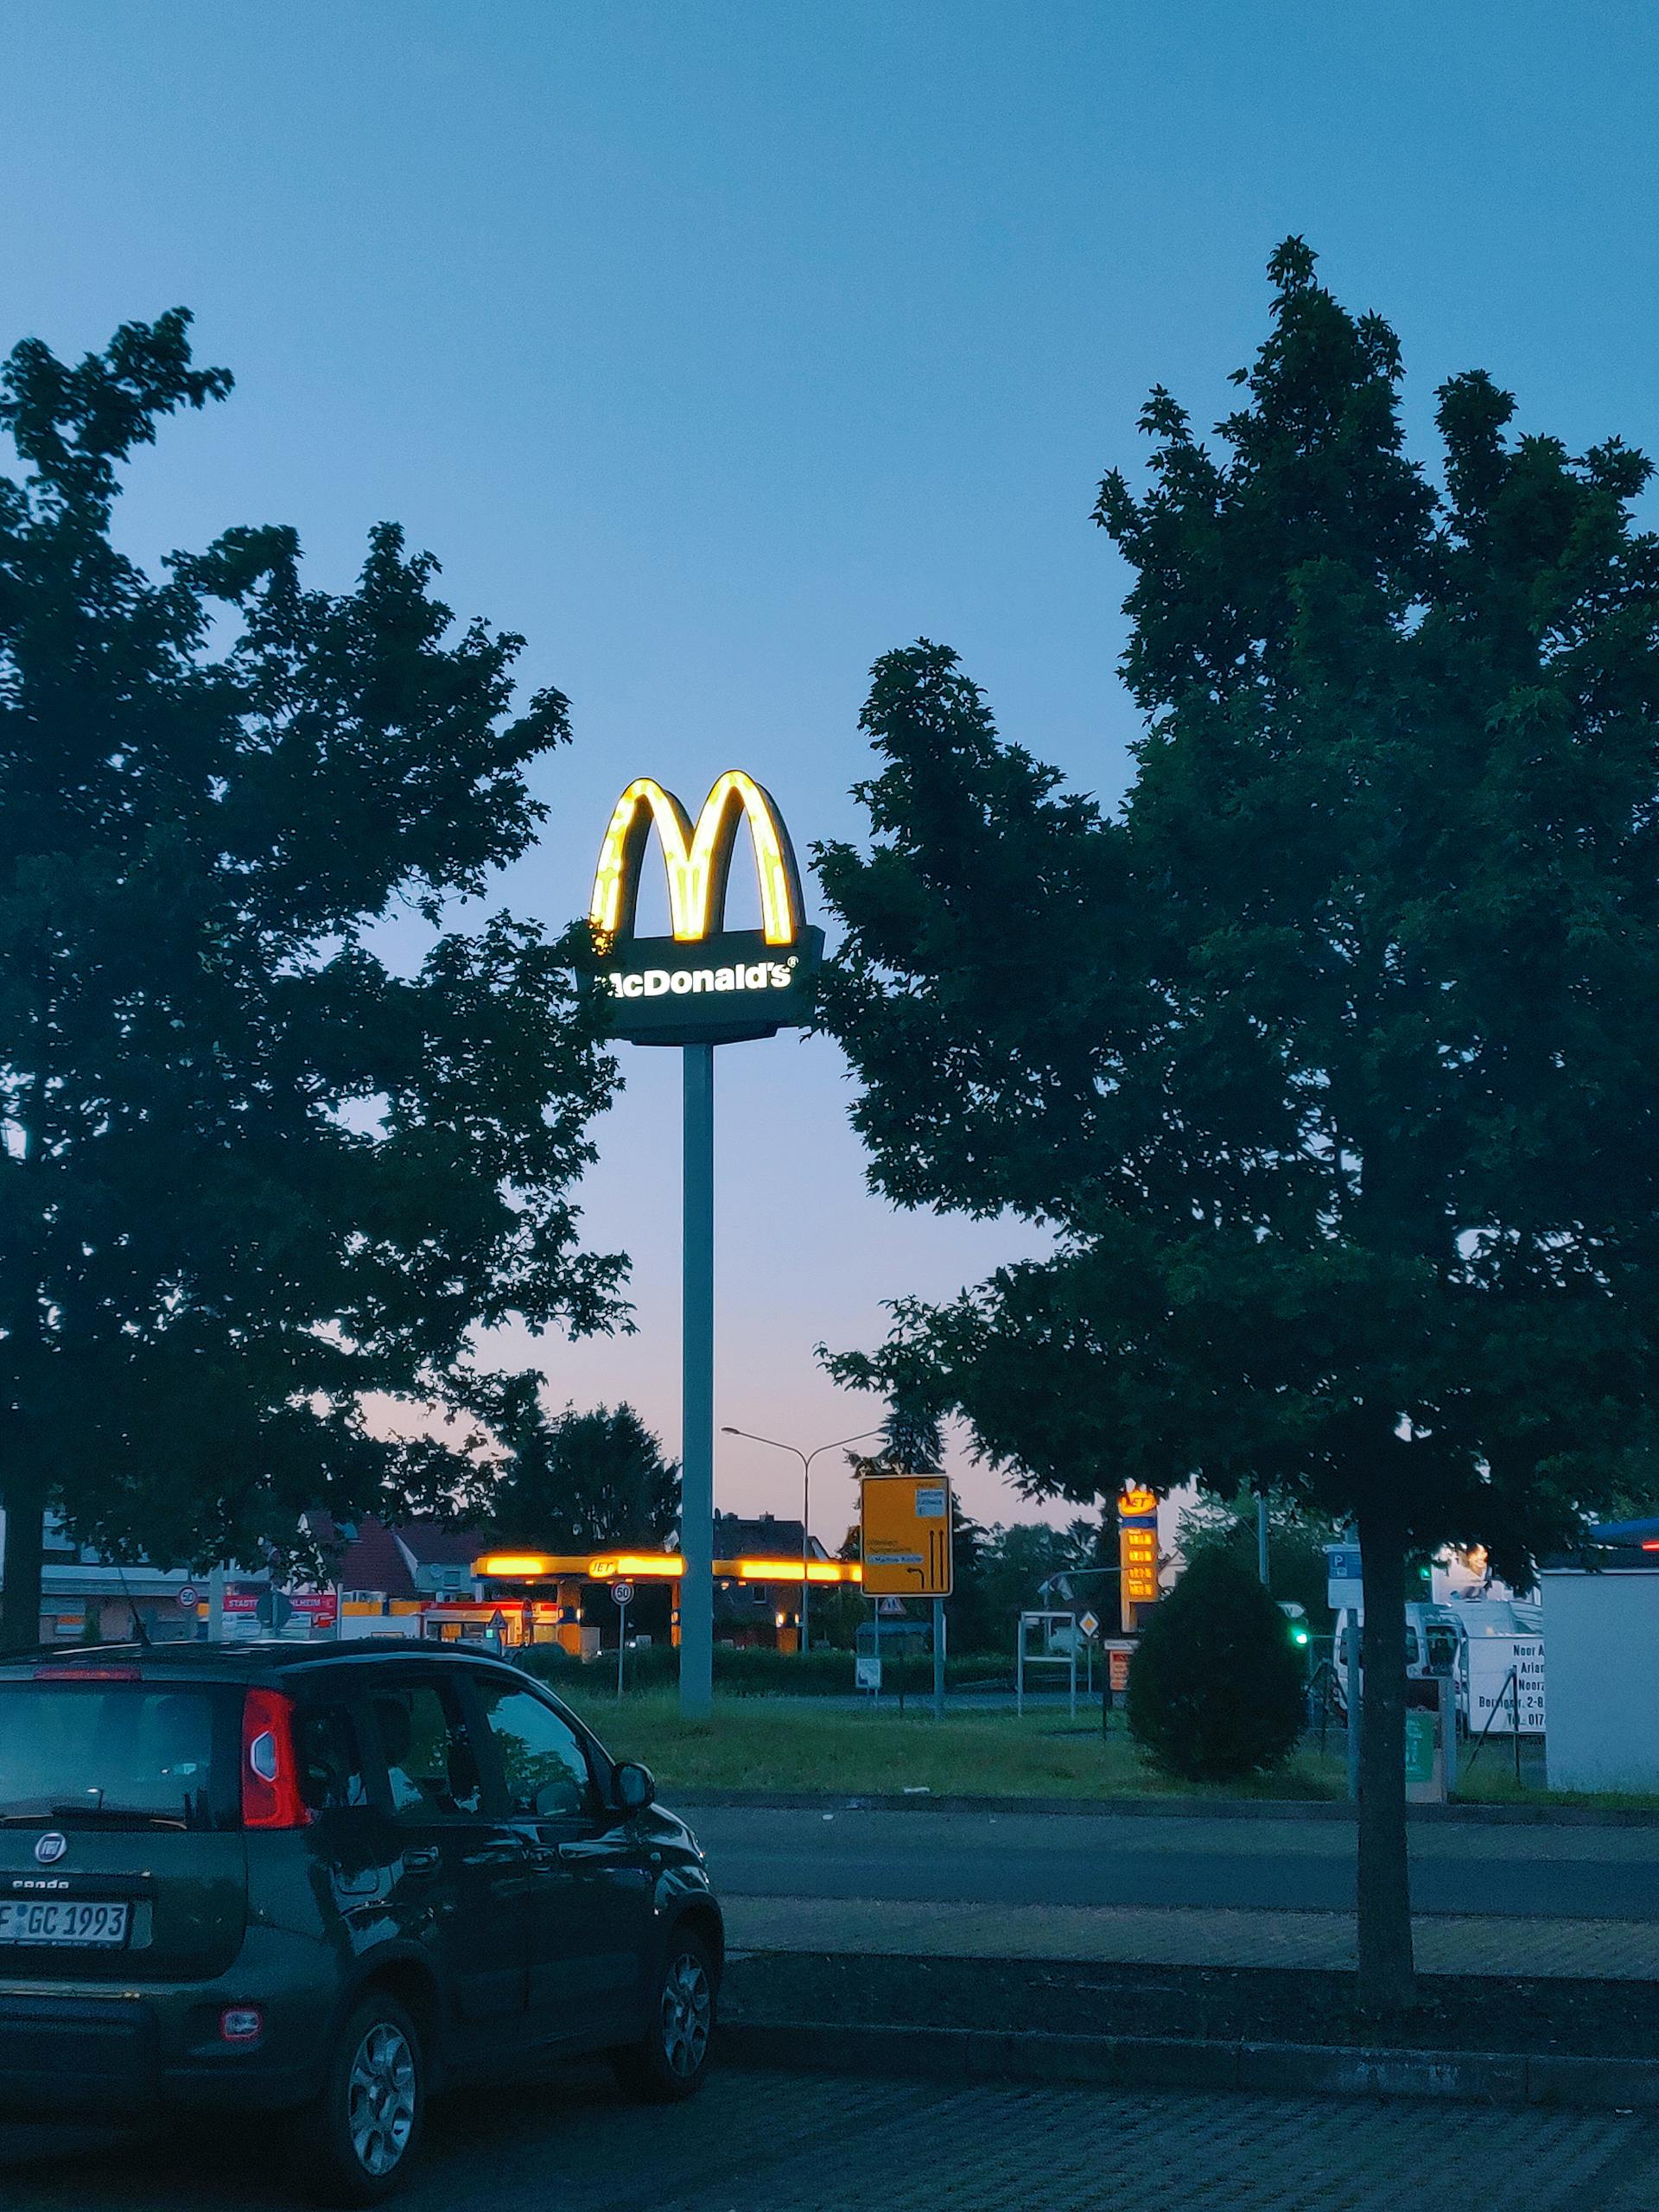 A car parked near McDonald's. | Source: Pexels